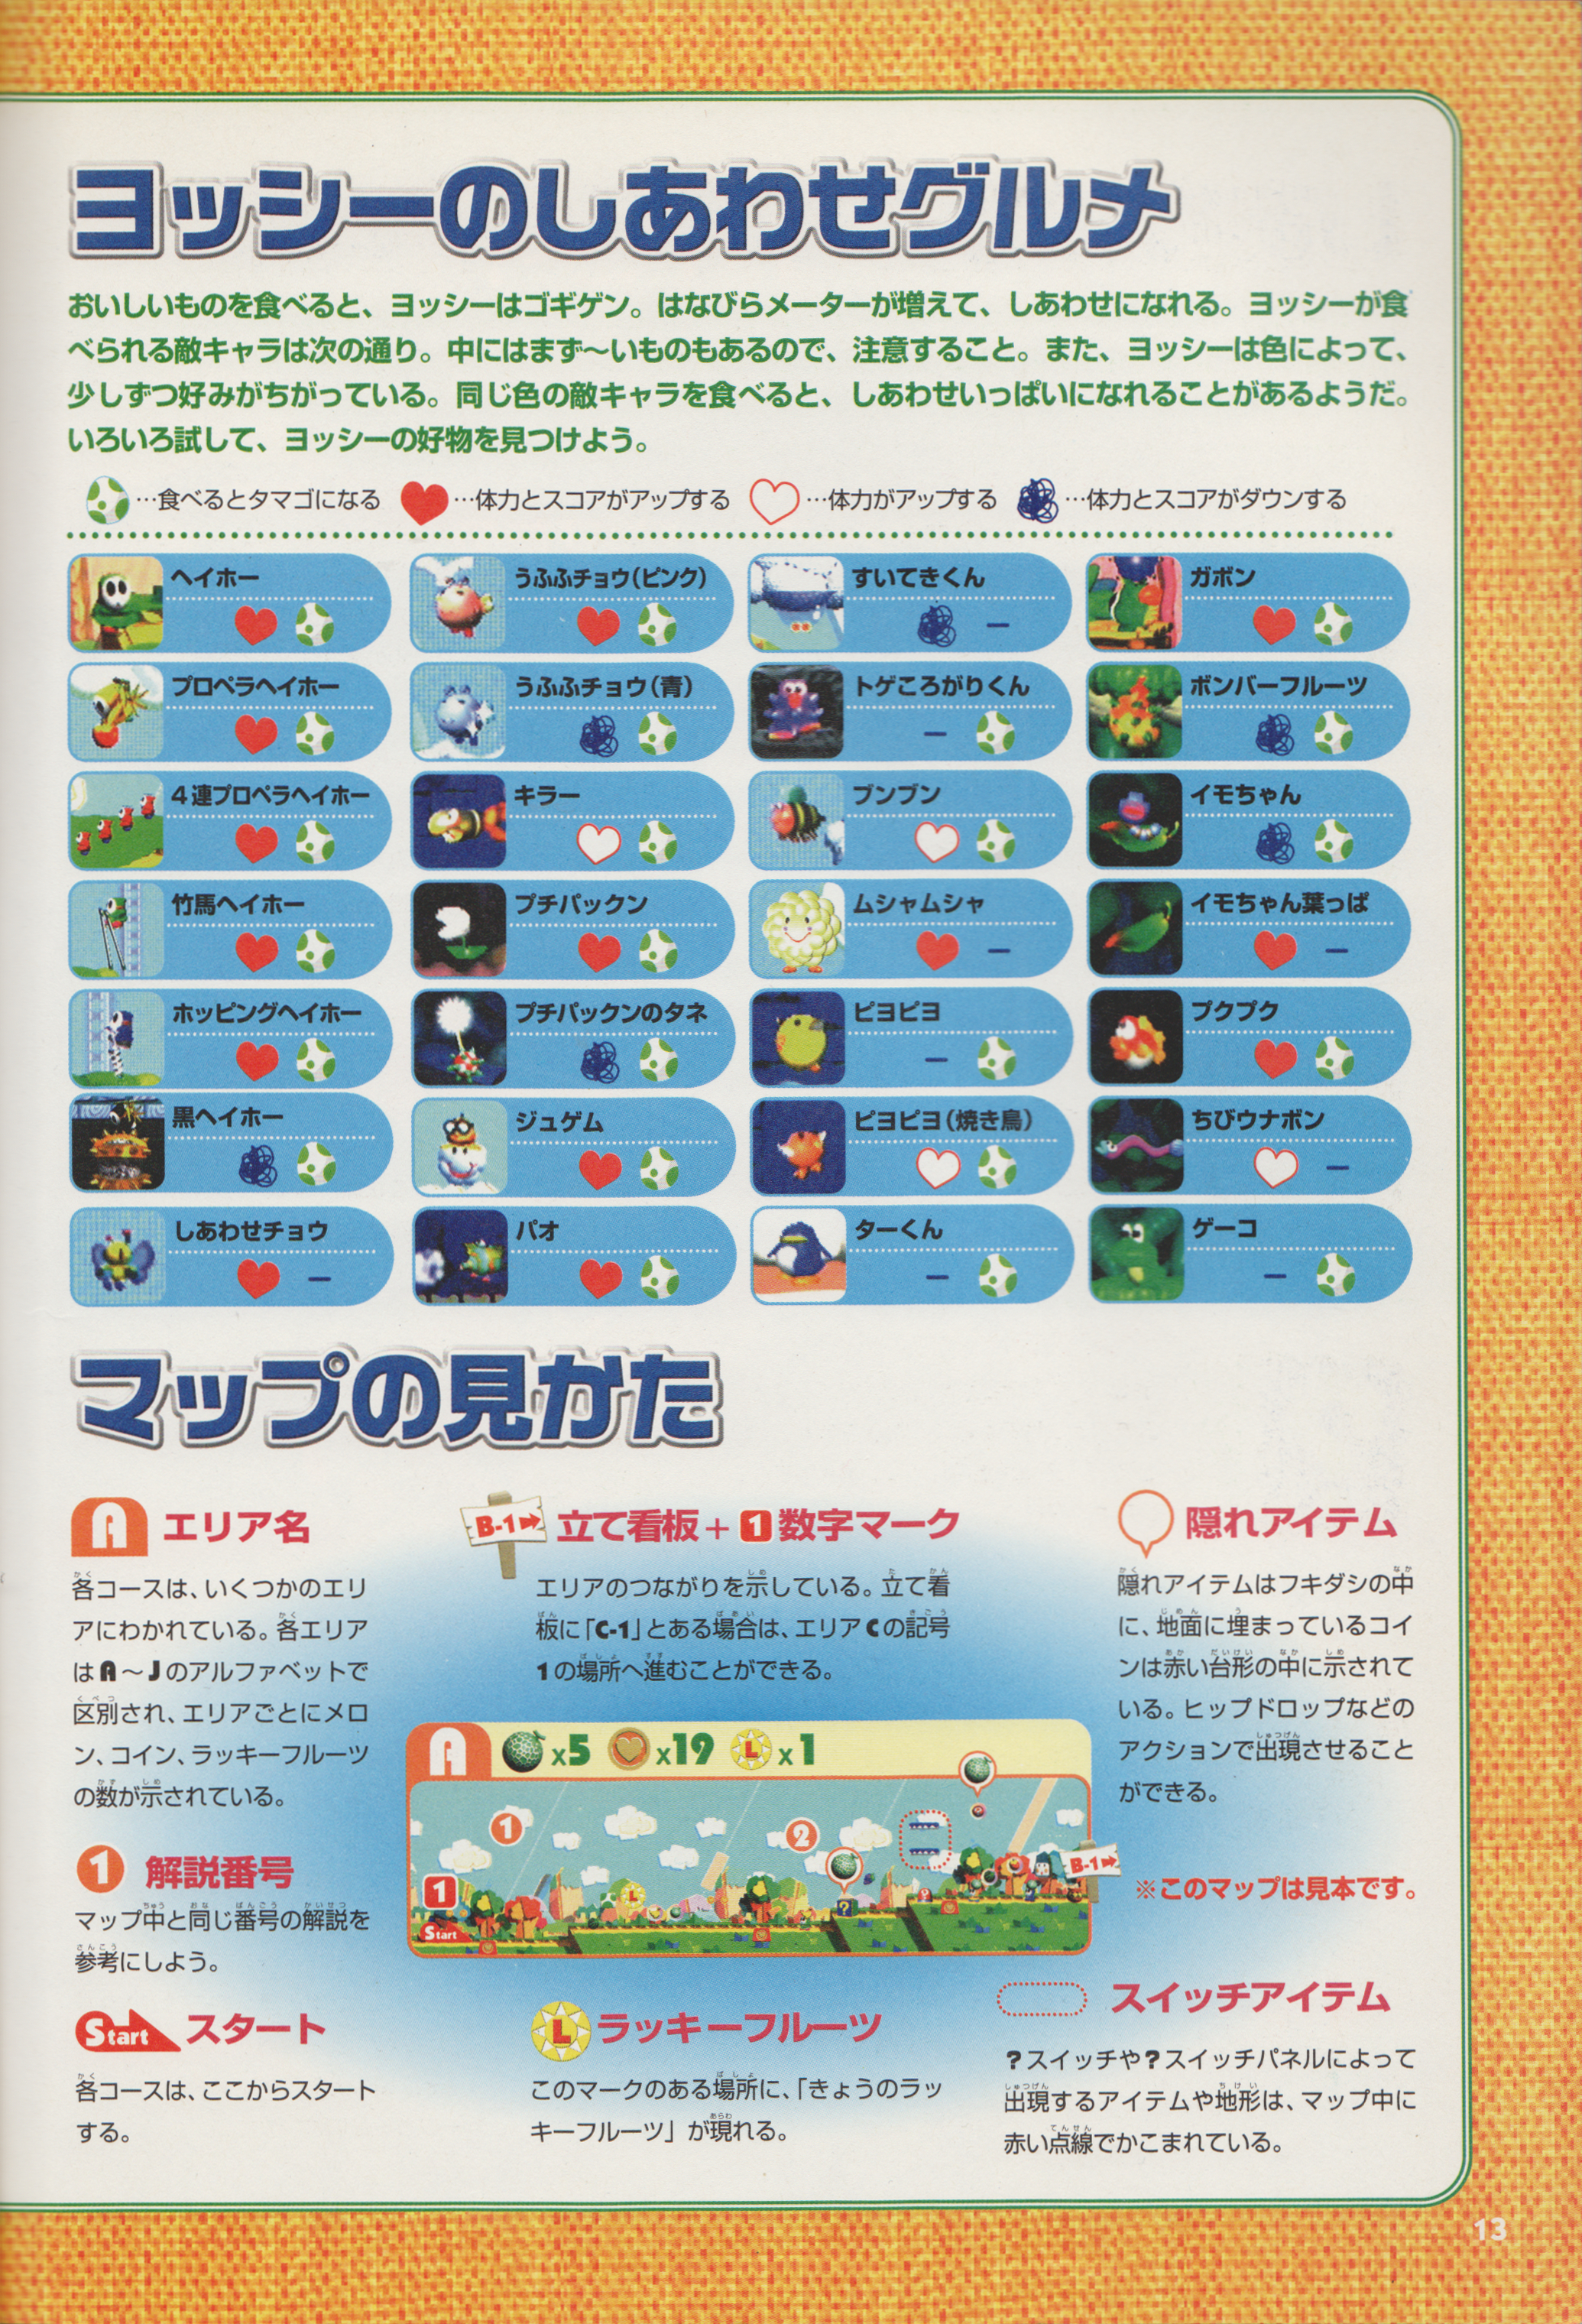 Yoshi island game